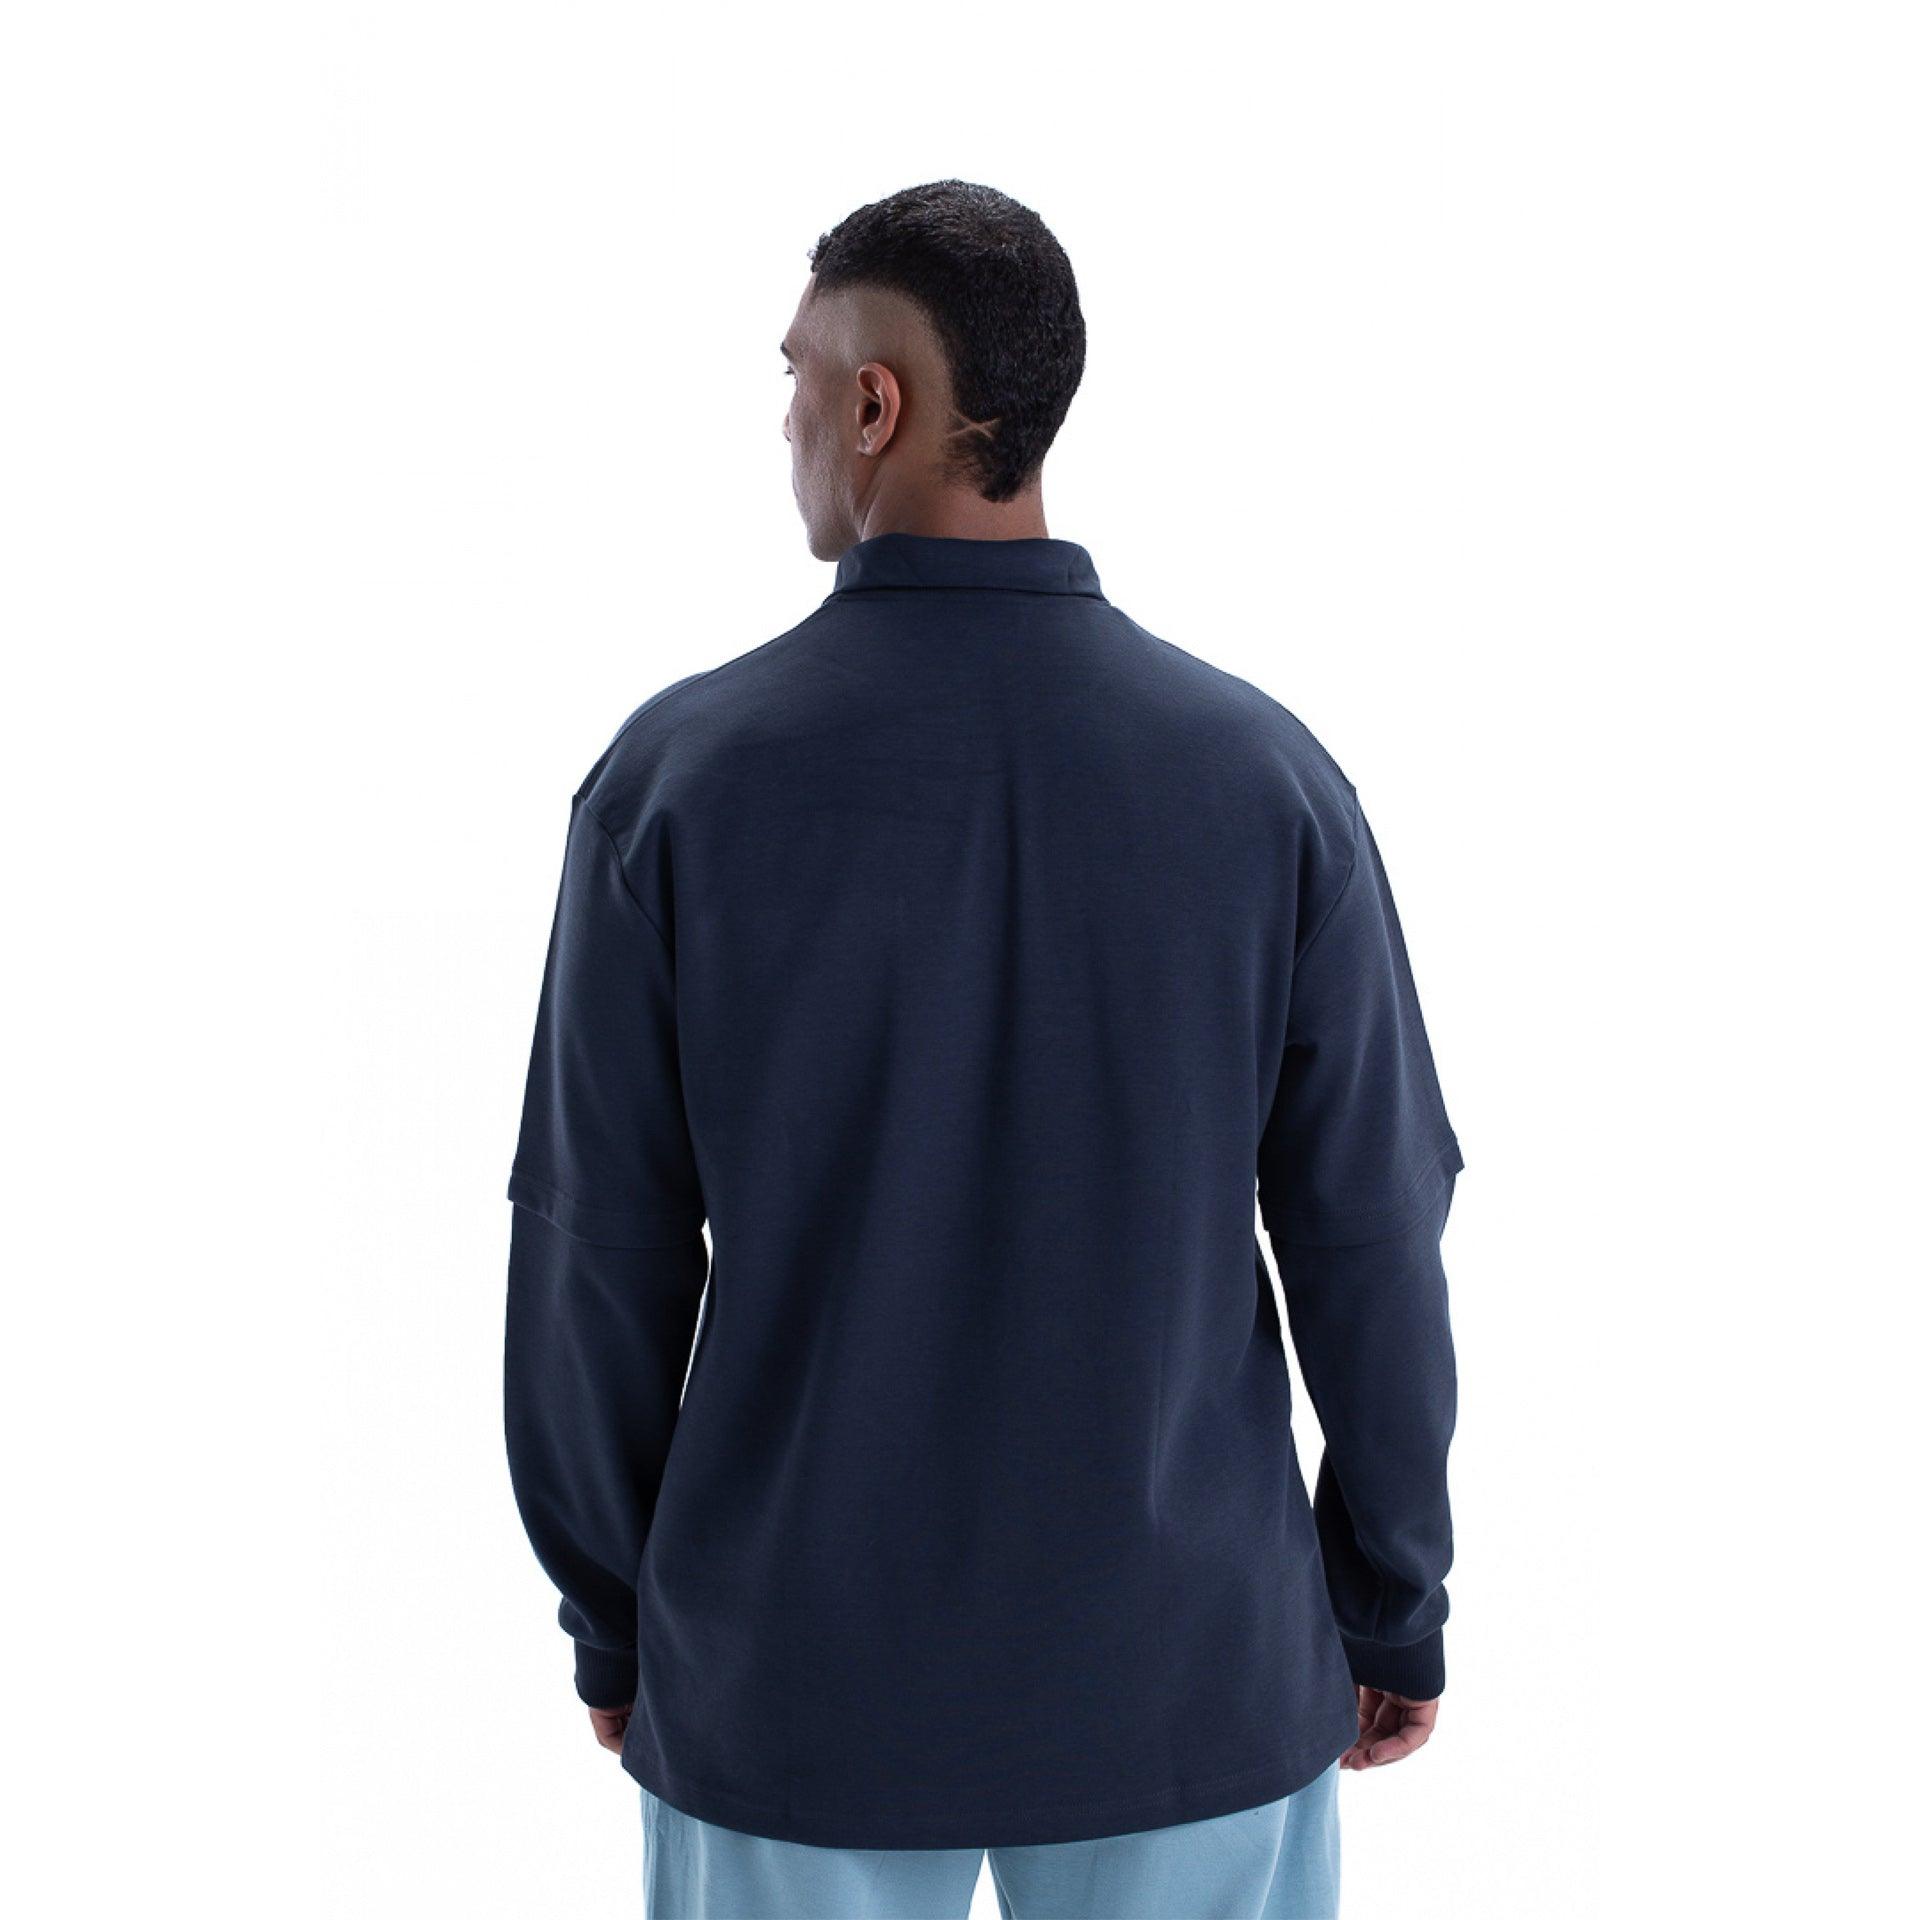 Navy Blue Sweatshirt By Weaver Design - WECRE8